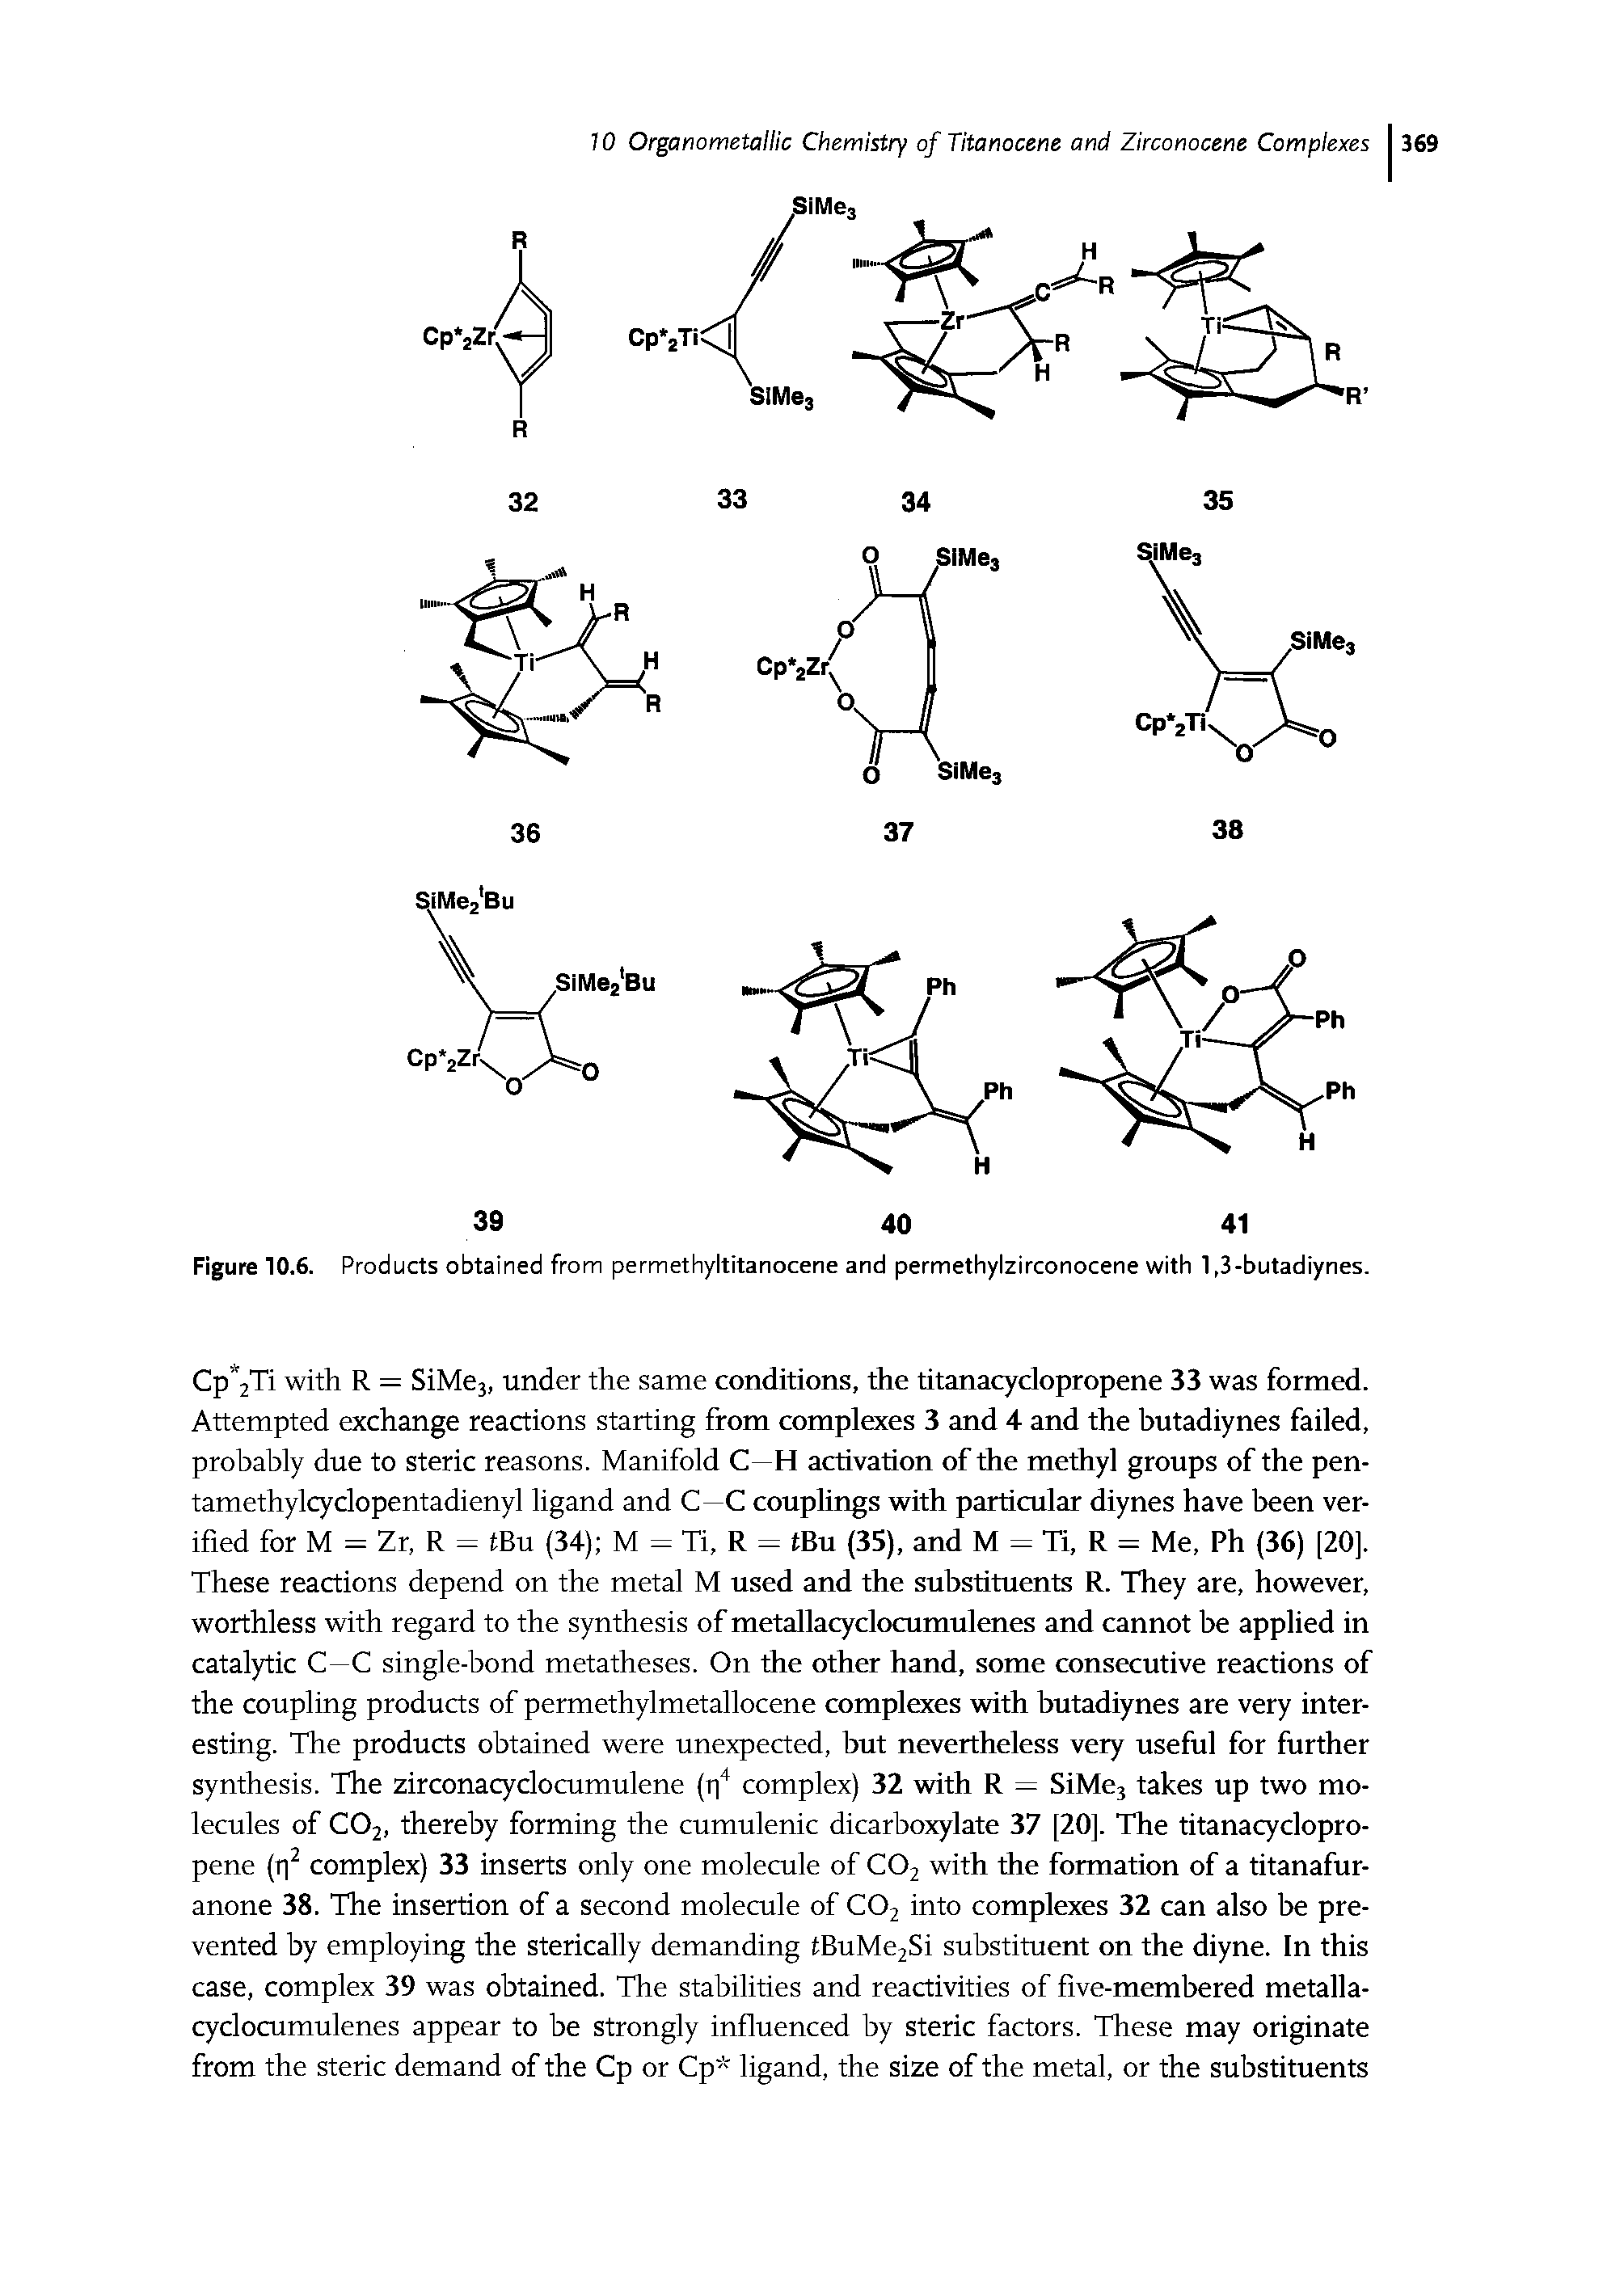 Figure 10.6. Products obtained from permethyltitanocene and permethylzirconocene with 1,3-butadiynes.